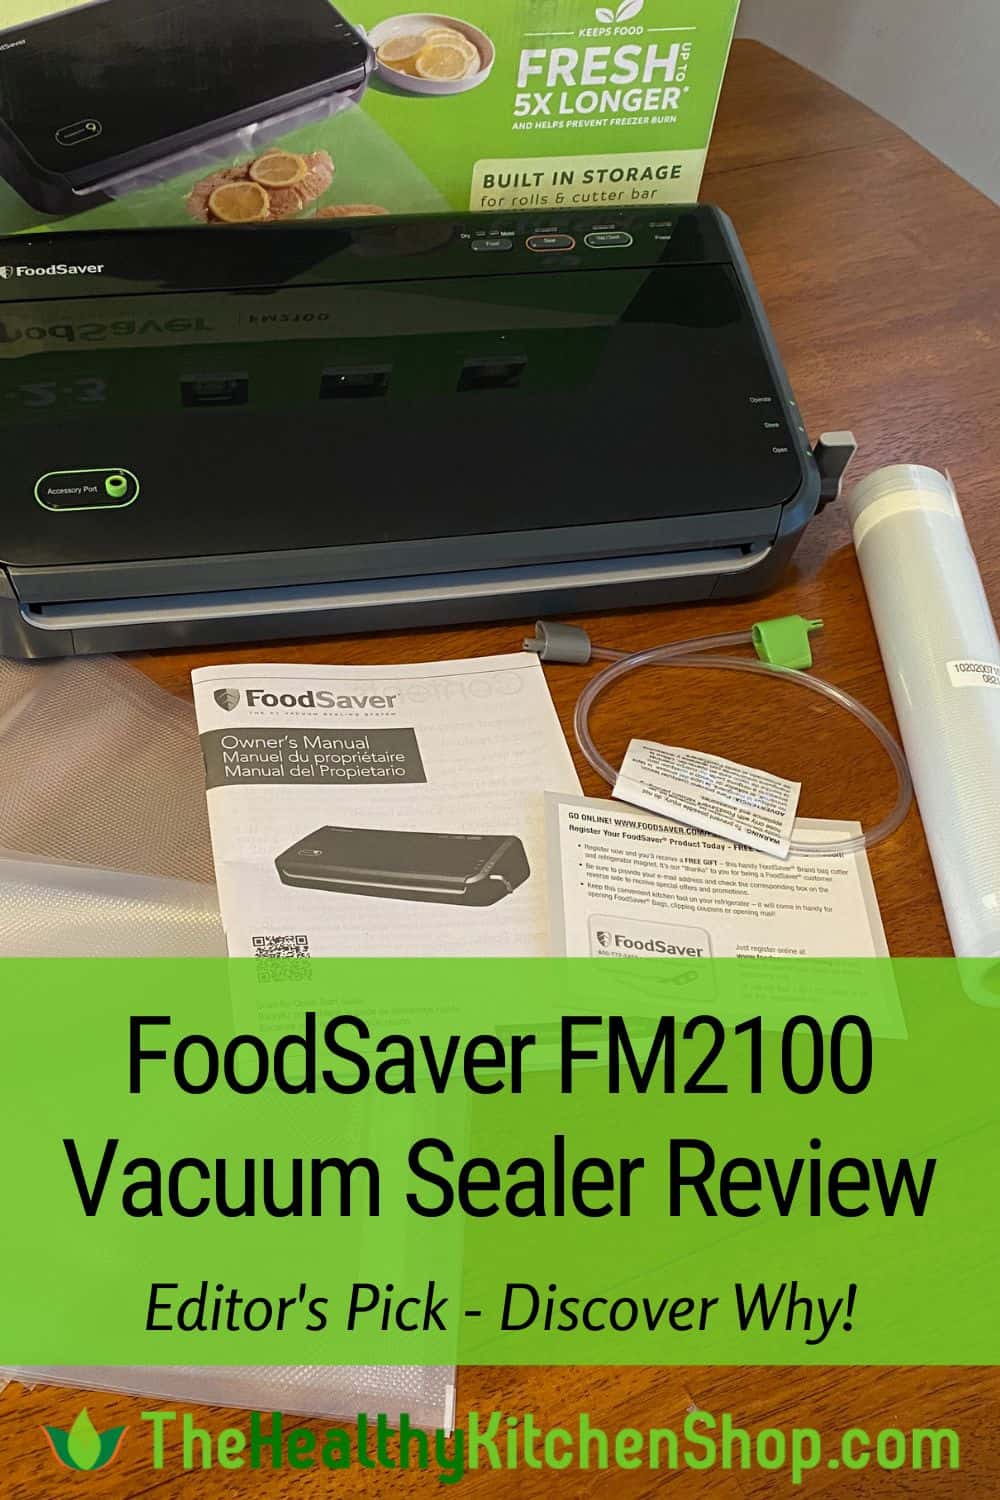 FoodSaver FM2100 Review